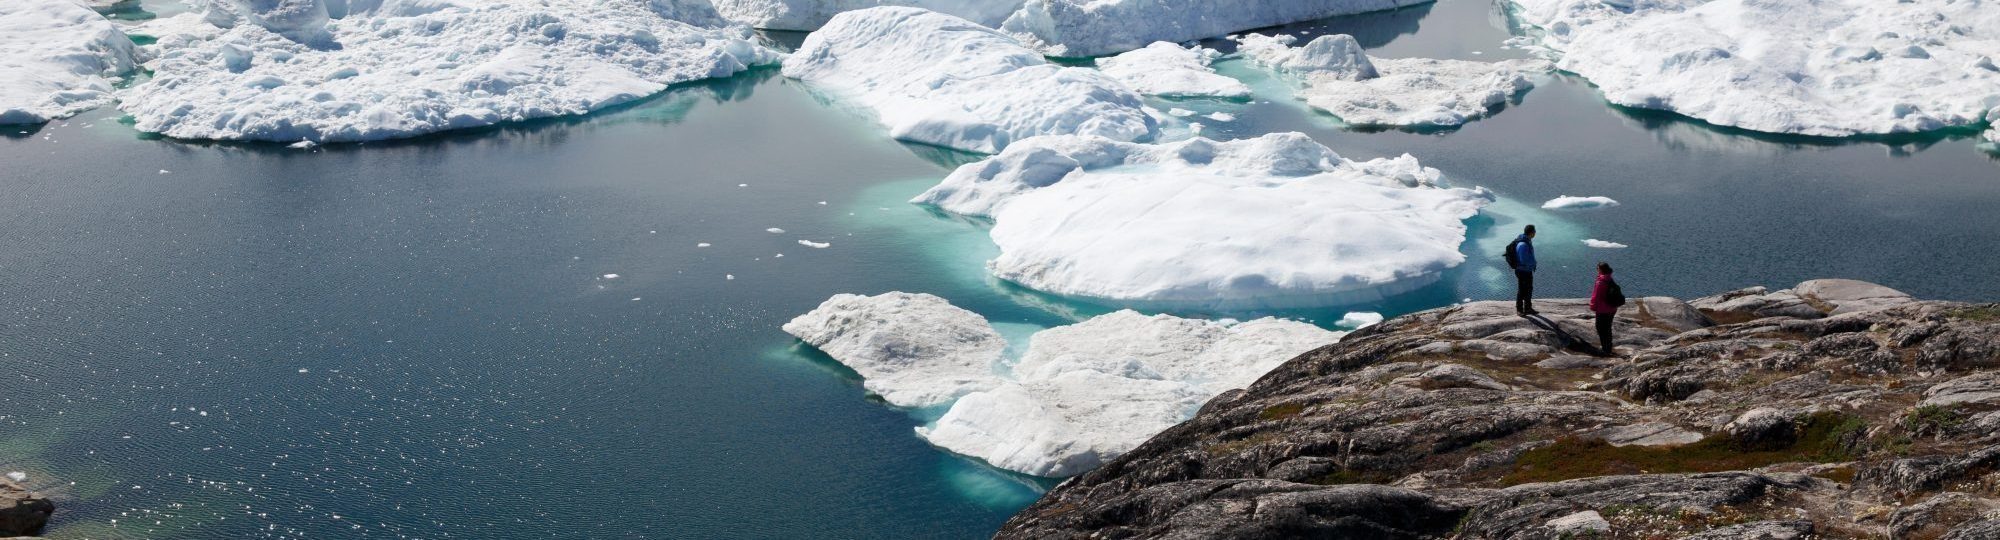 <p>Receding ice near Ilulissat, Greenland (Image: Alamy)</p>